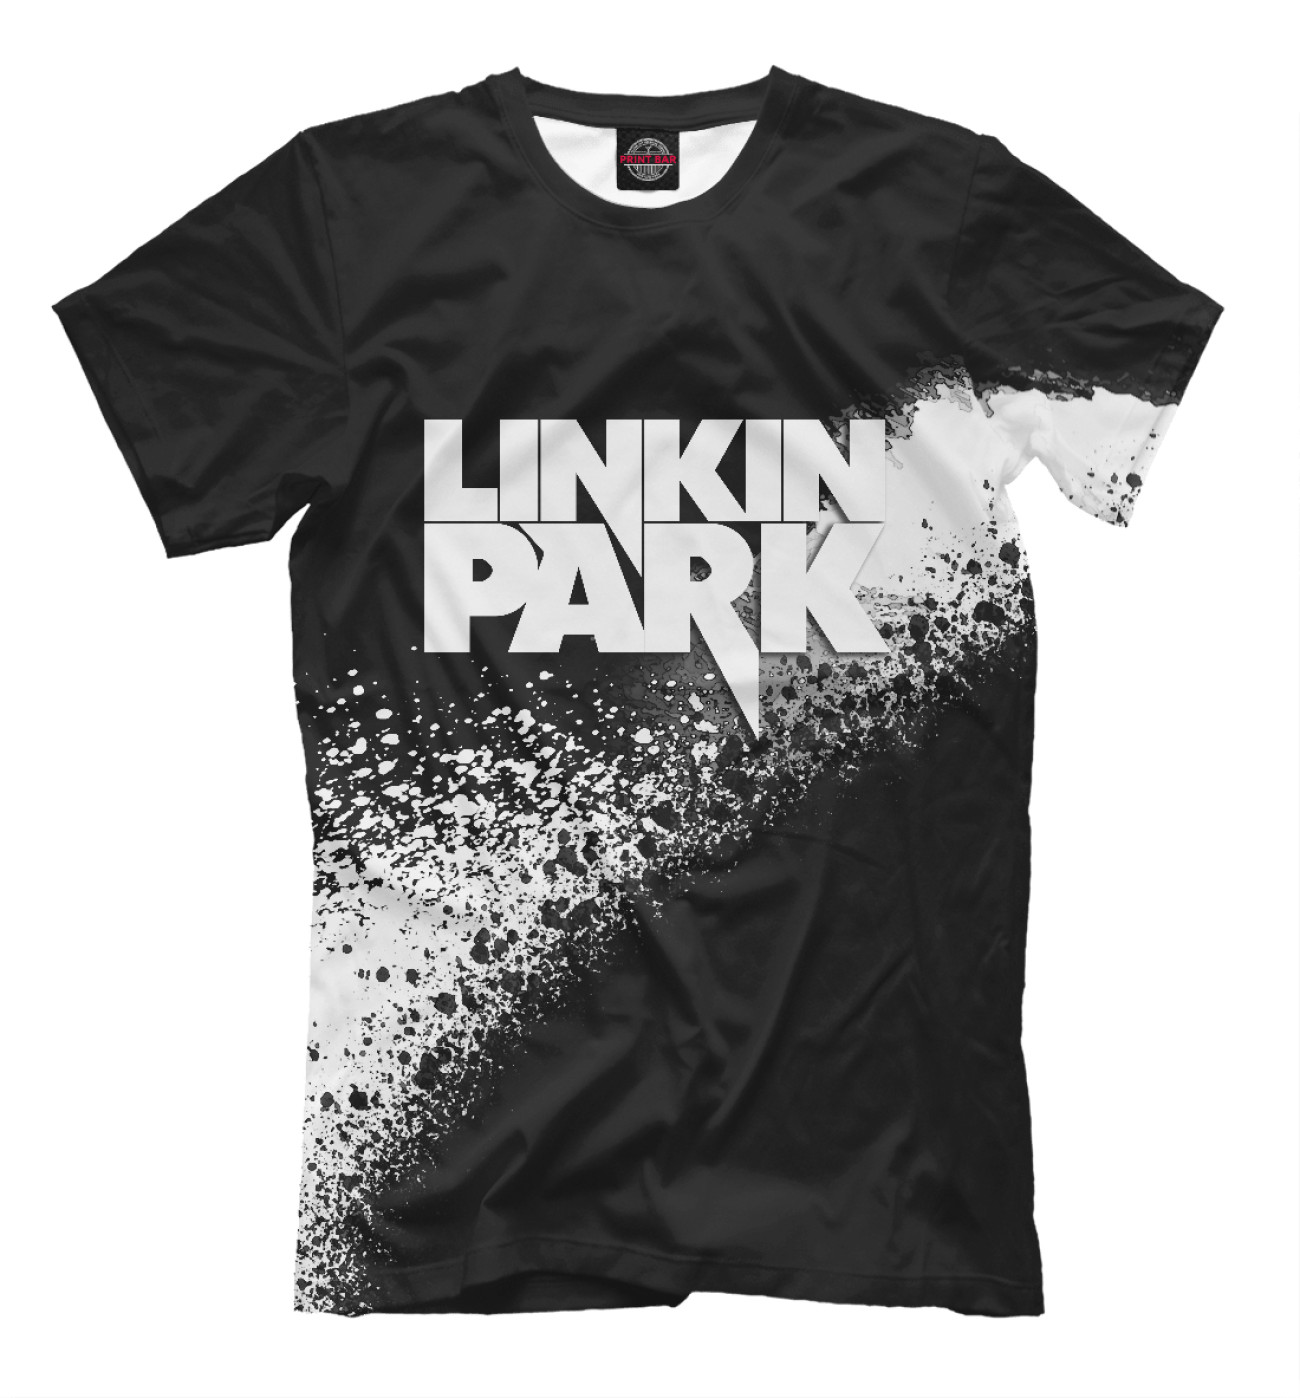 Мужская Футболка Linkin Park + краски, артикул: LIN-942705-fut-2